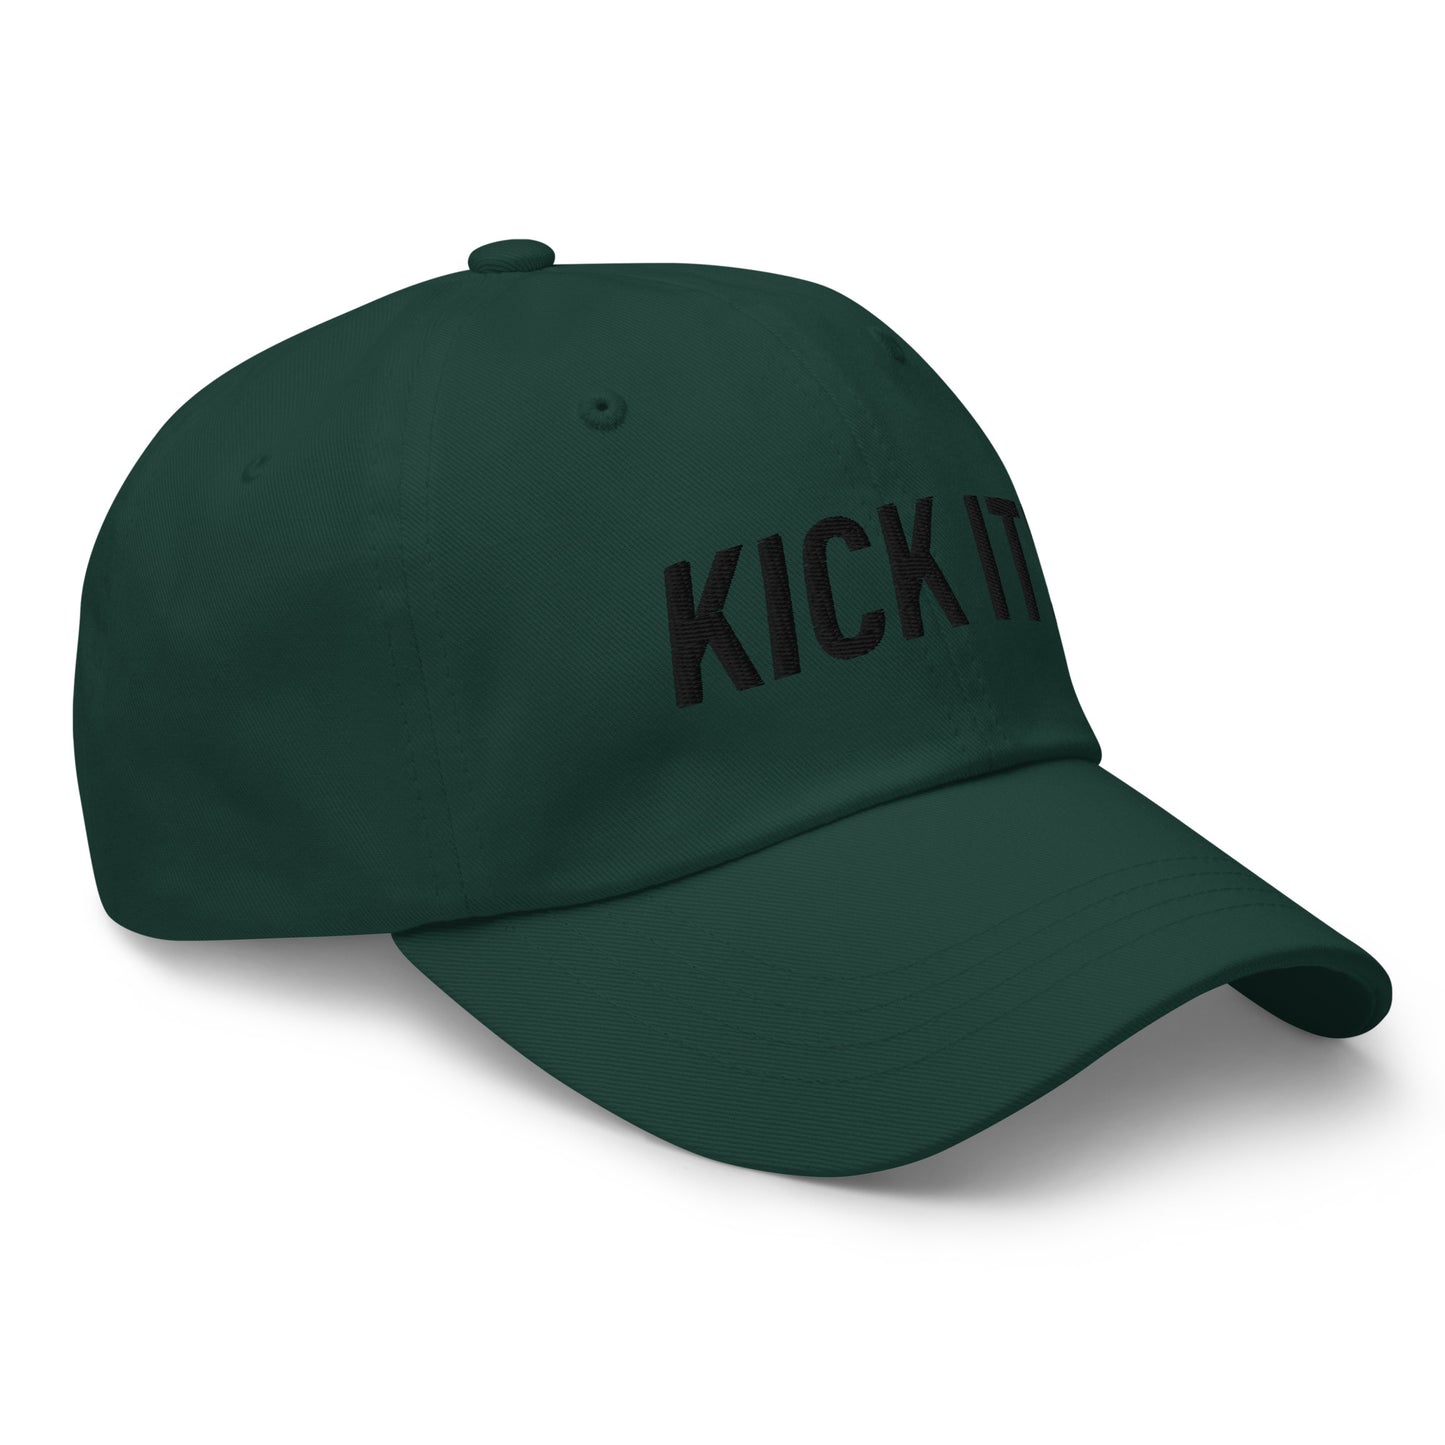 Kick It! Dad hat - Black letters